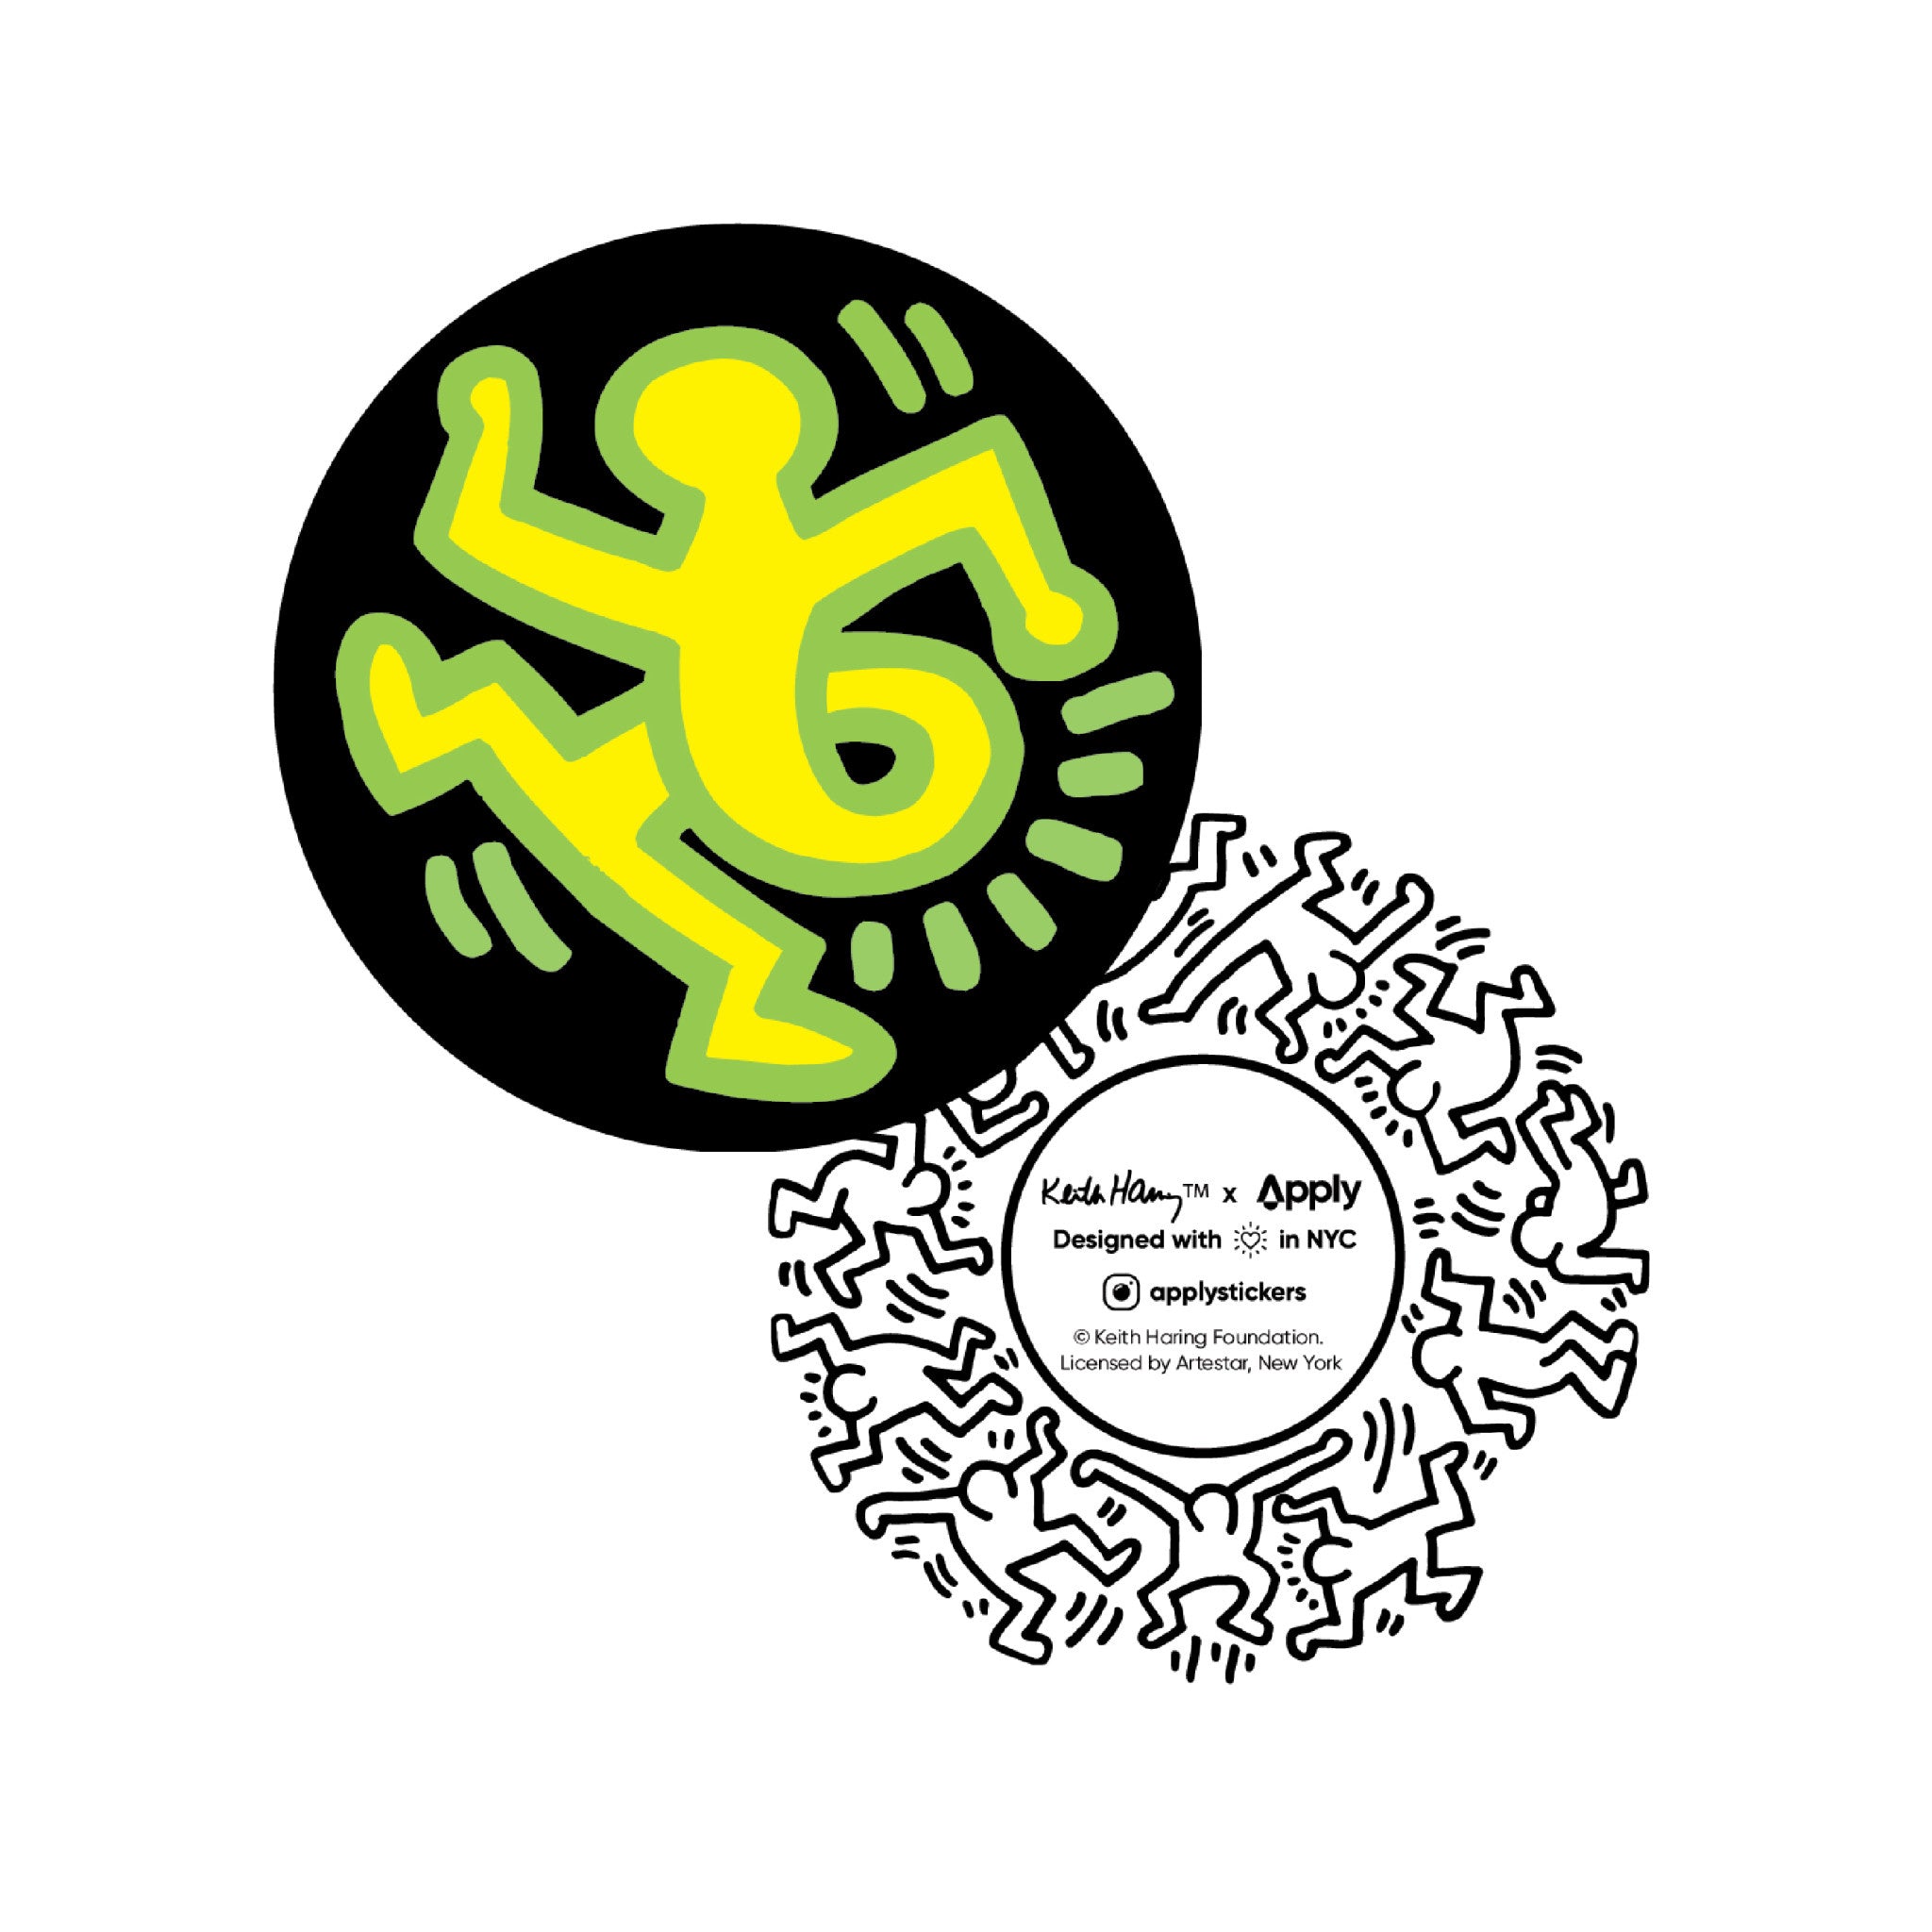 Keith Haring Sticker Pack I - Wynwood Walls Shop